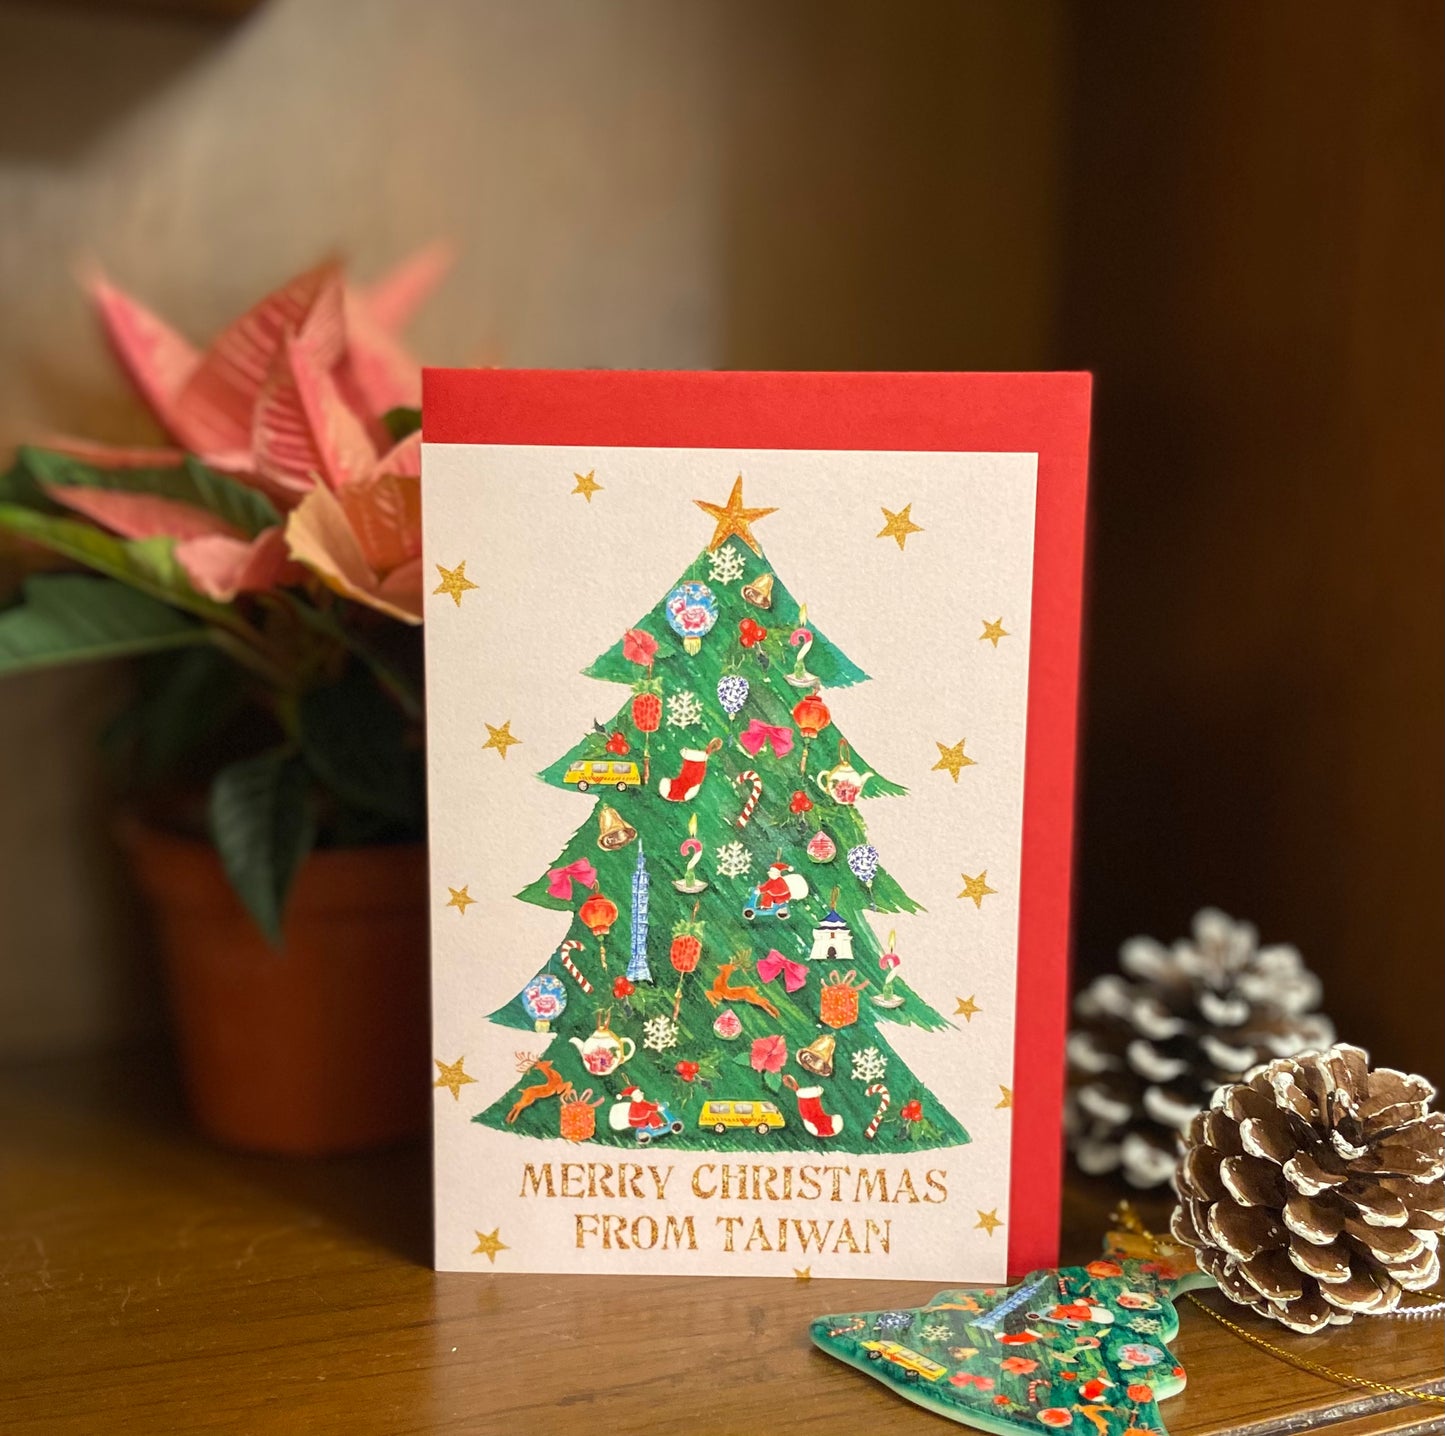 Taiwan Christmas tree card